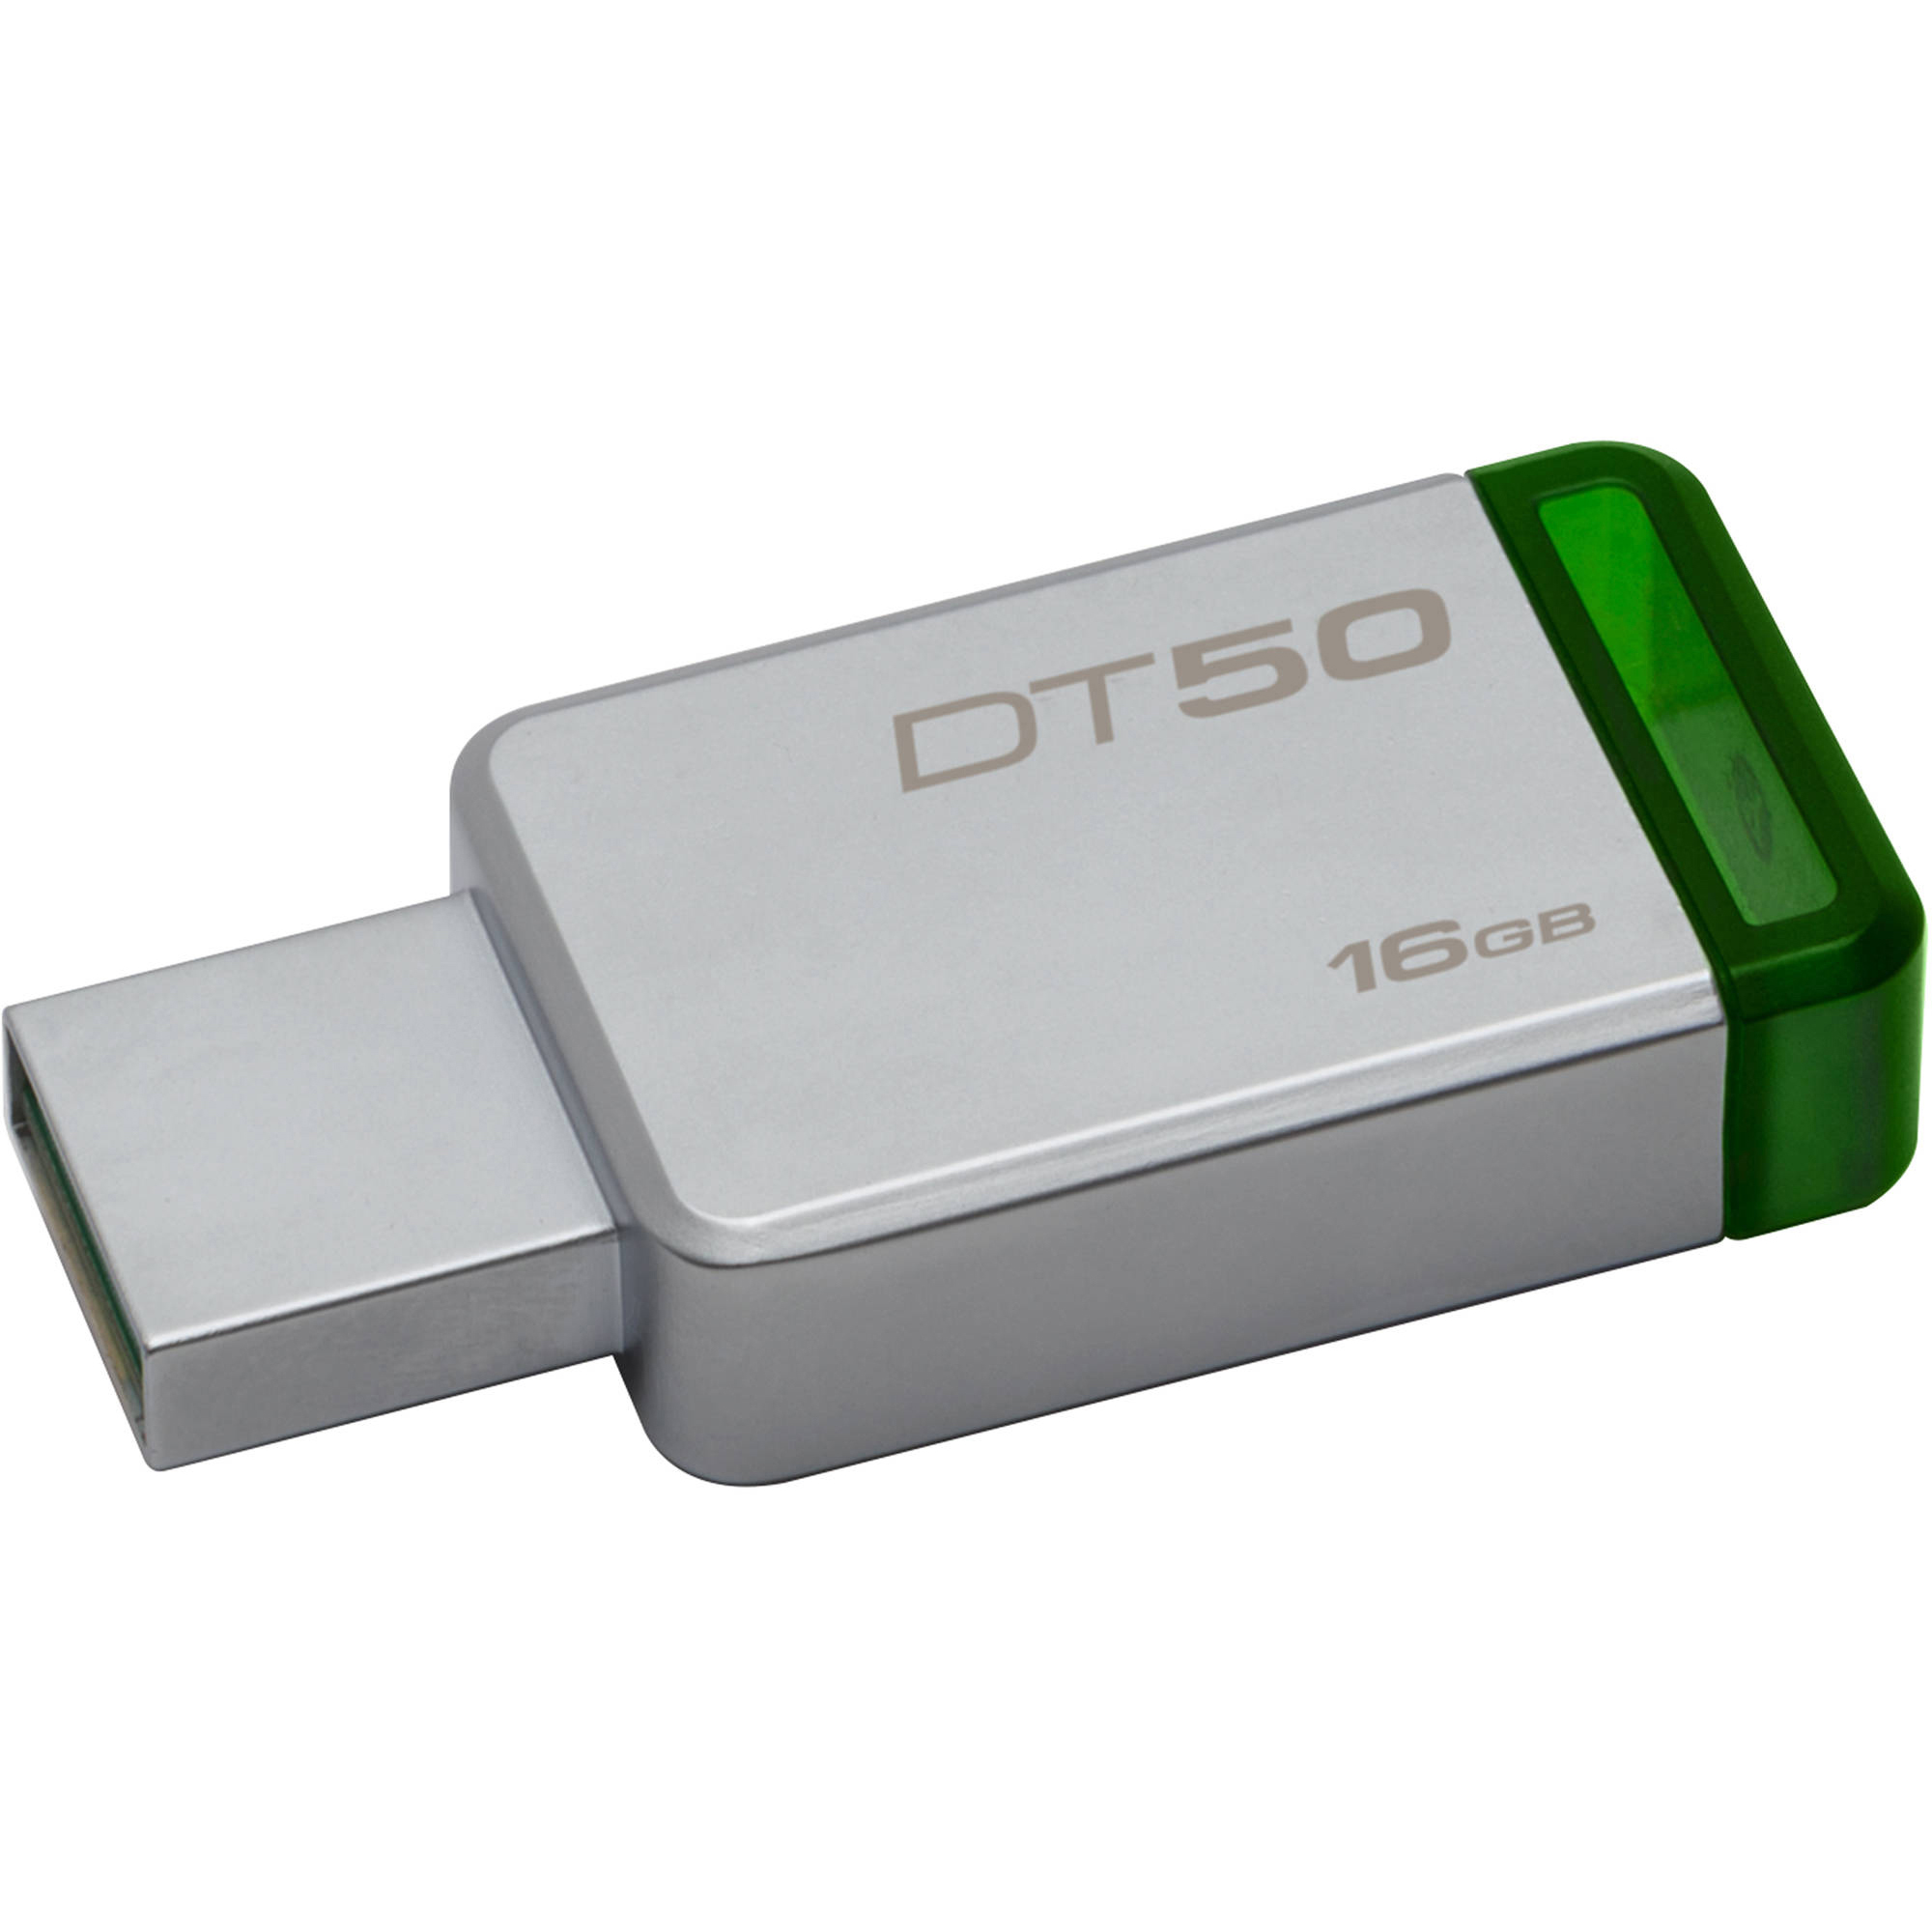 Original Kingston DataTraveler 50 16GB USB 3.0 Flash Drive (DT50/16GB)